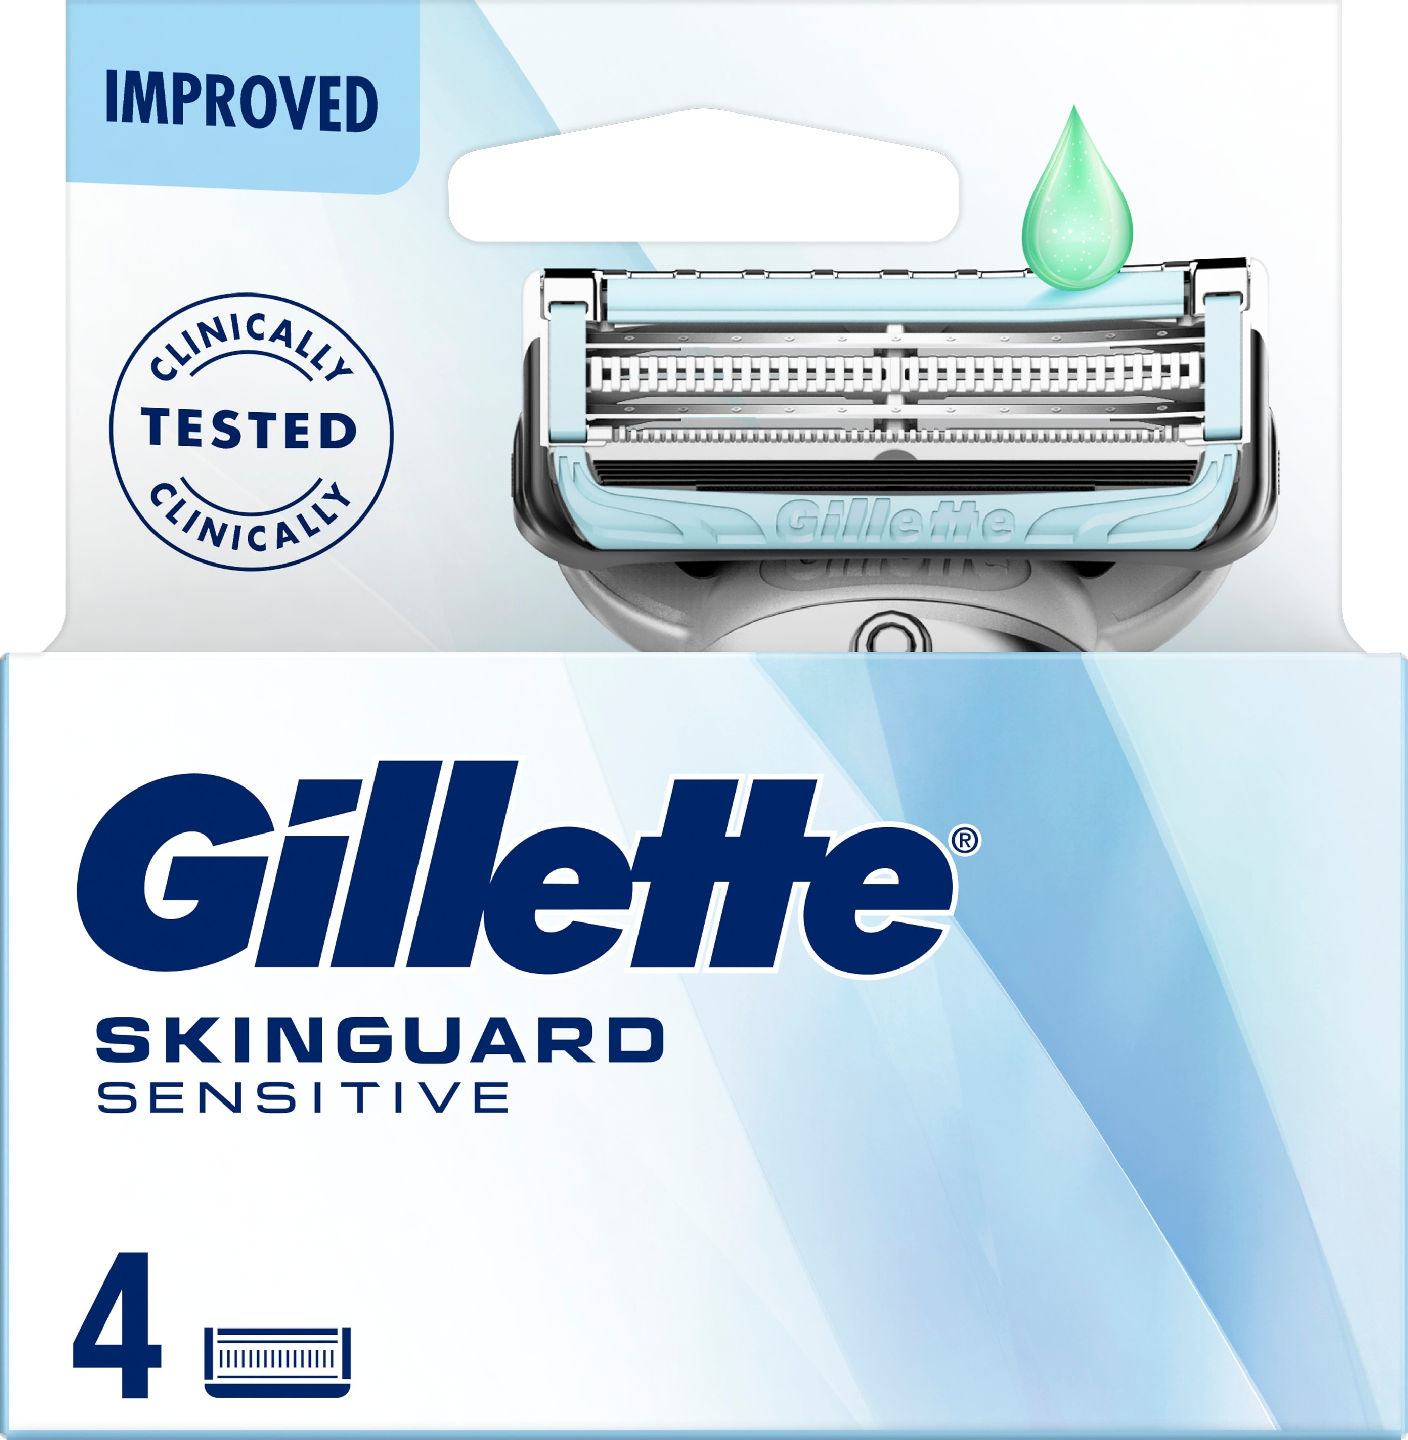 Gillette Skinguard Sensitive terä 4kpl